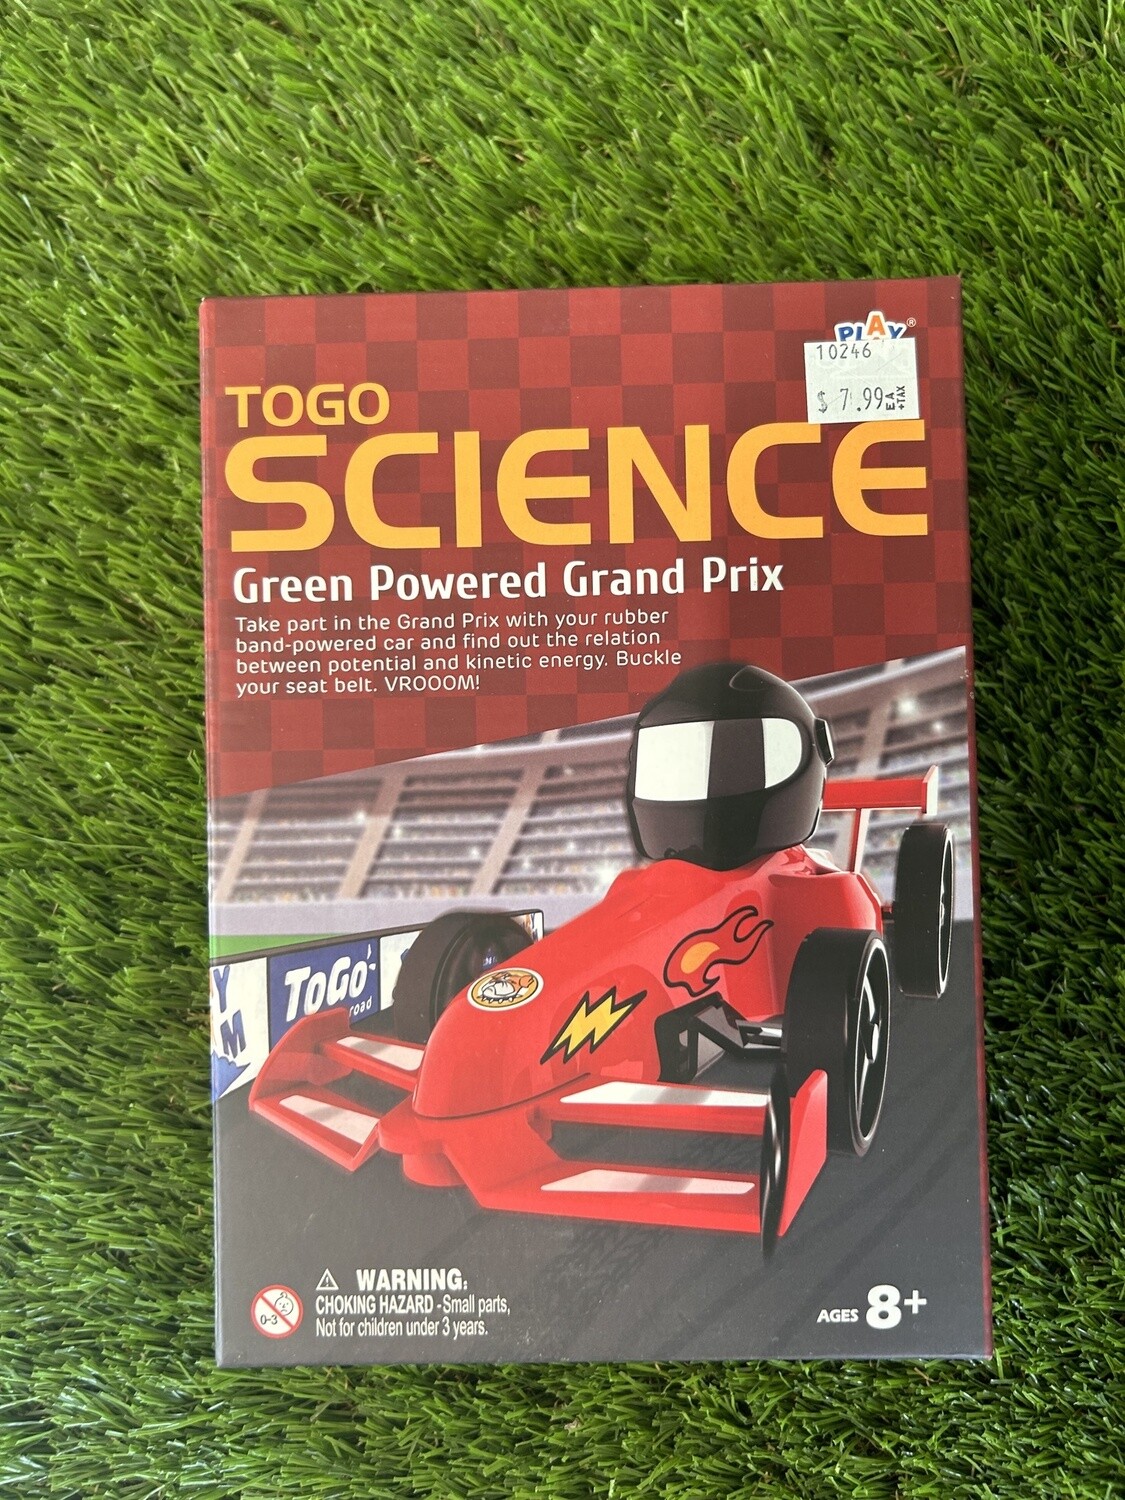 Green Powered Grand Prix